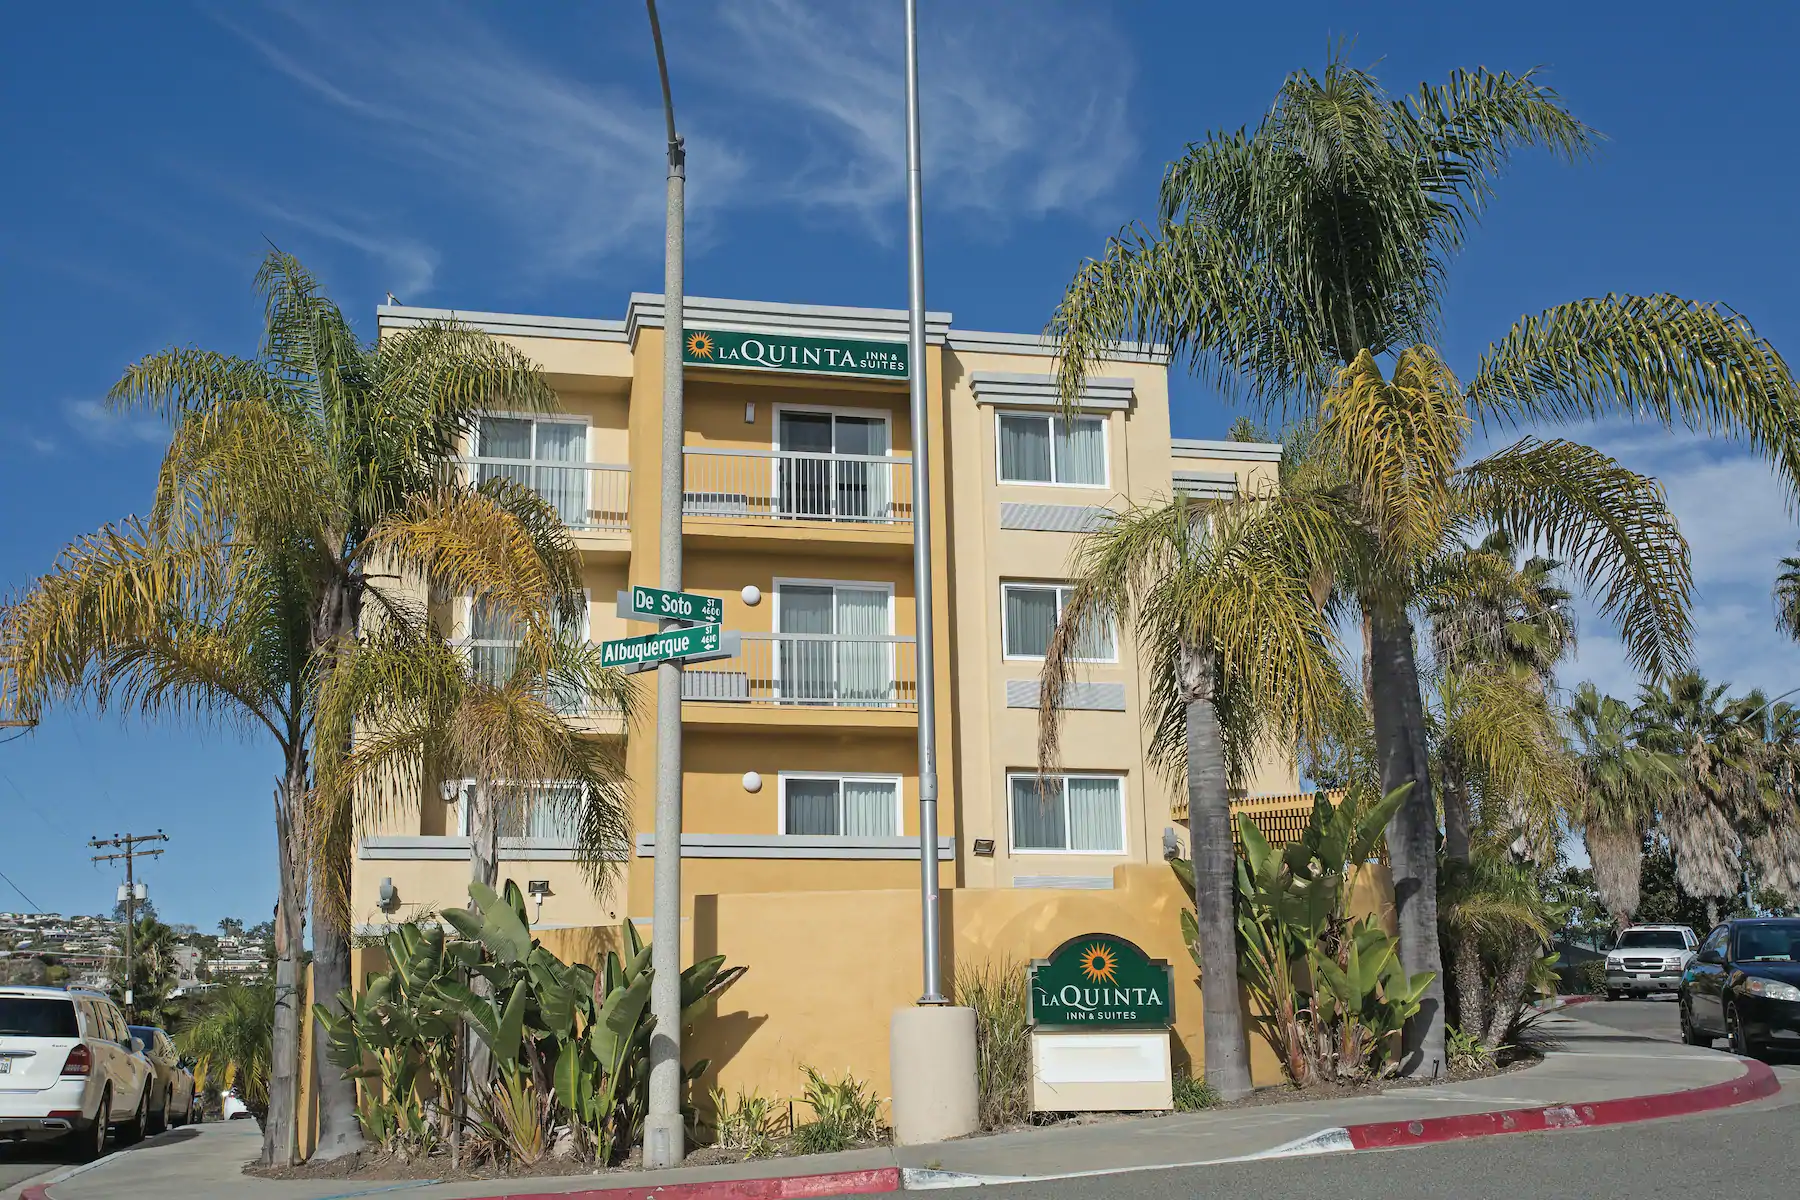 La Quinta Inn & Suites by Wyndham San Diego Mission Bay Hotel RecruitParents